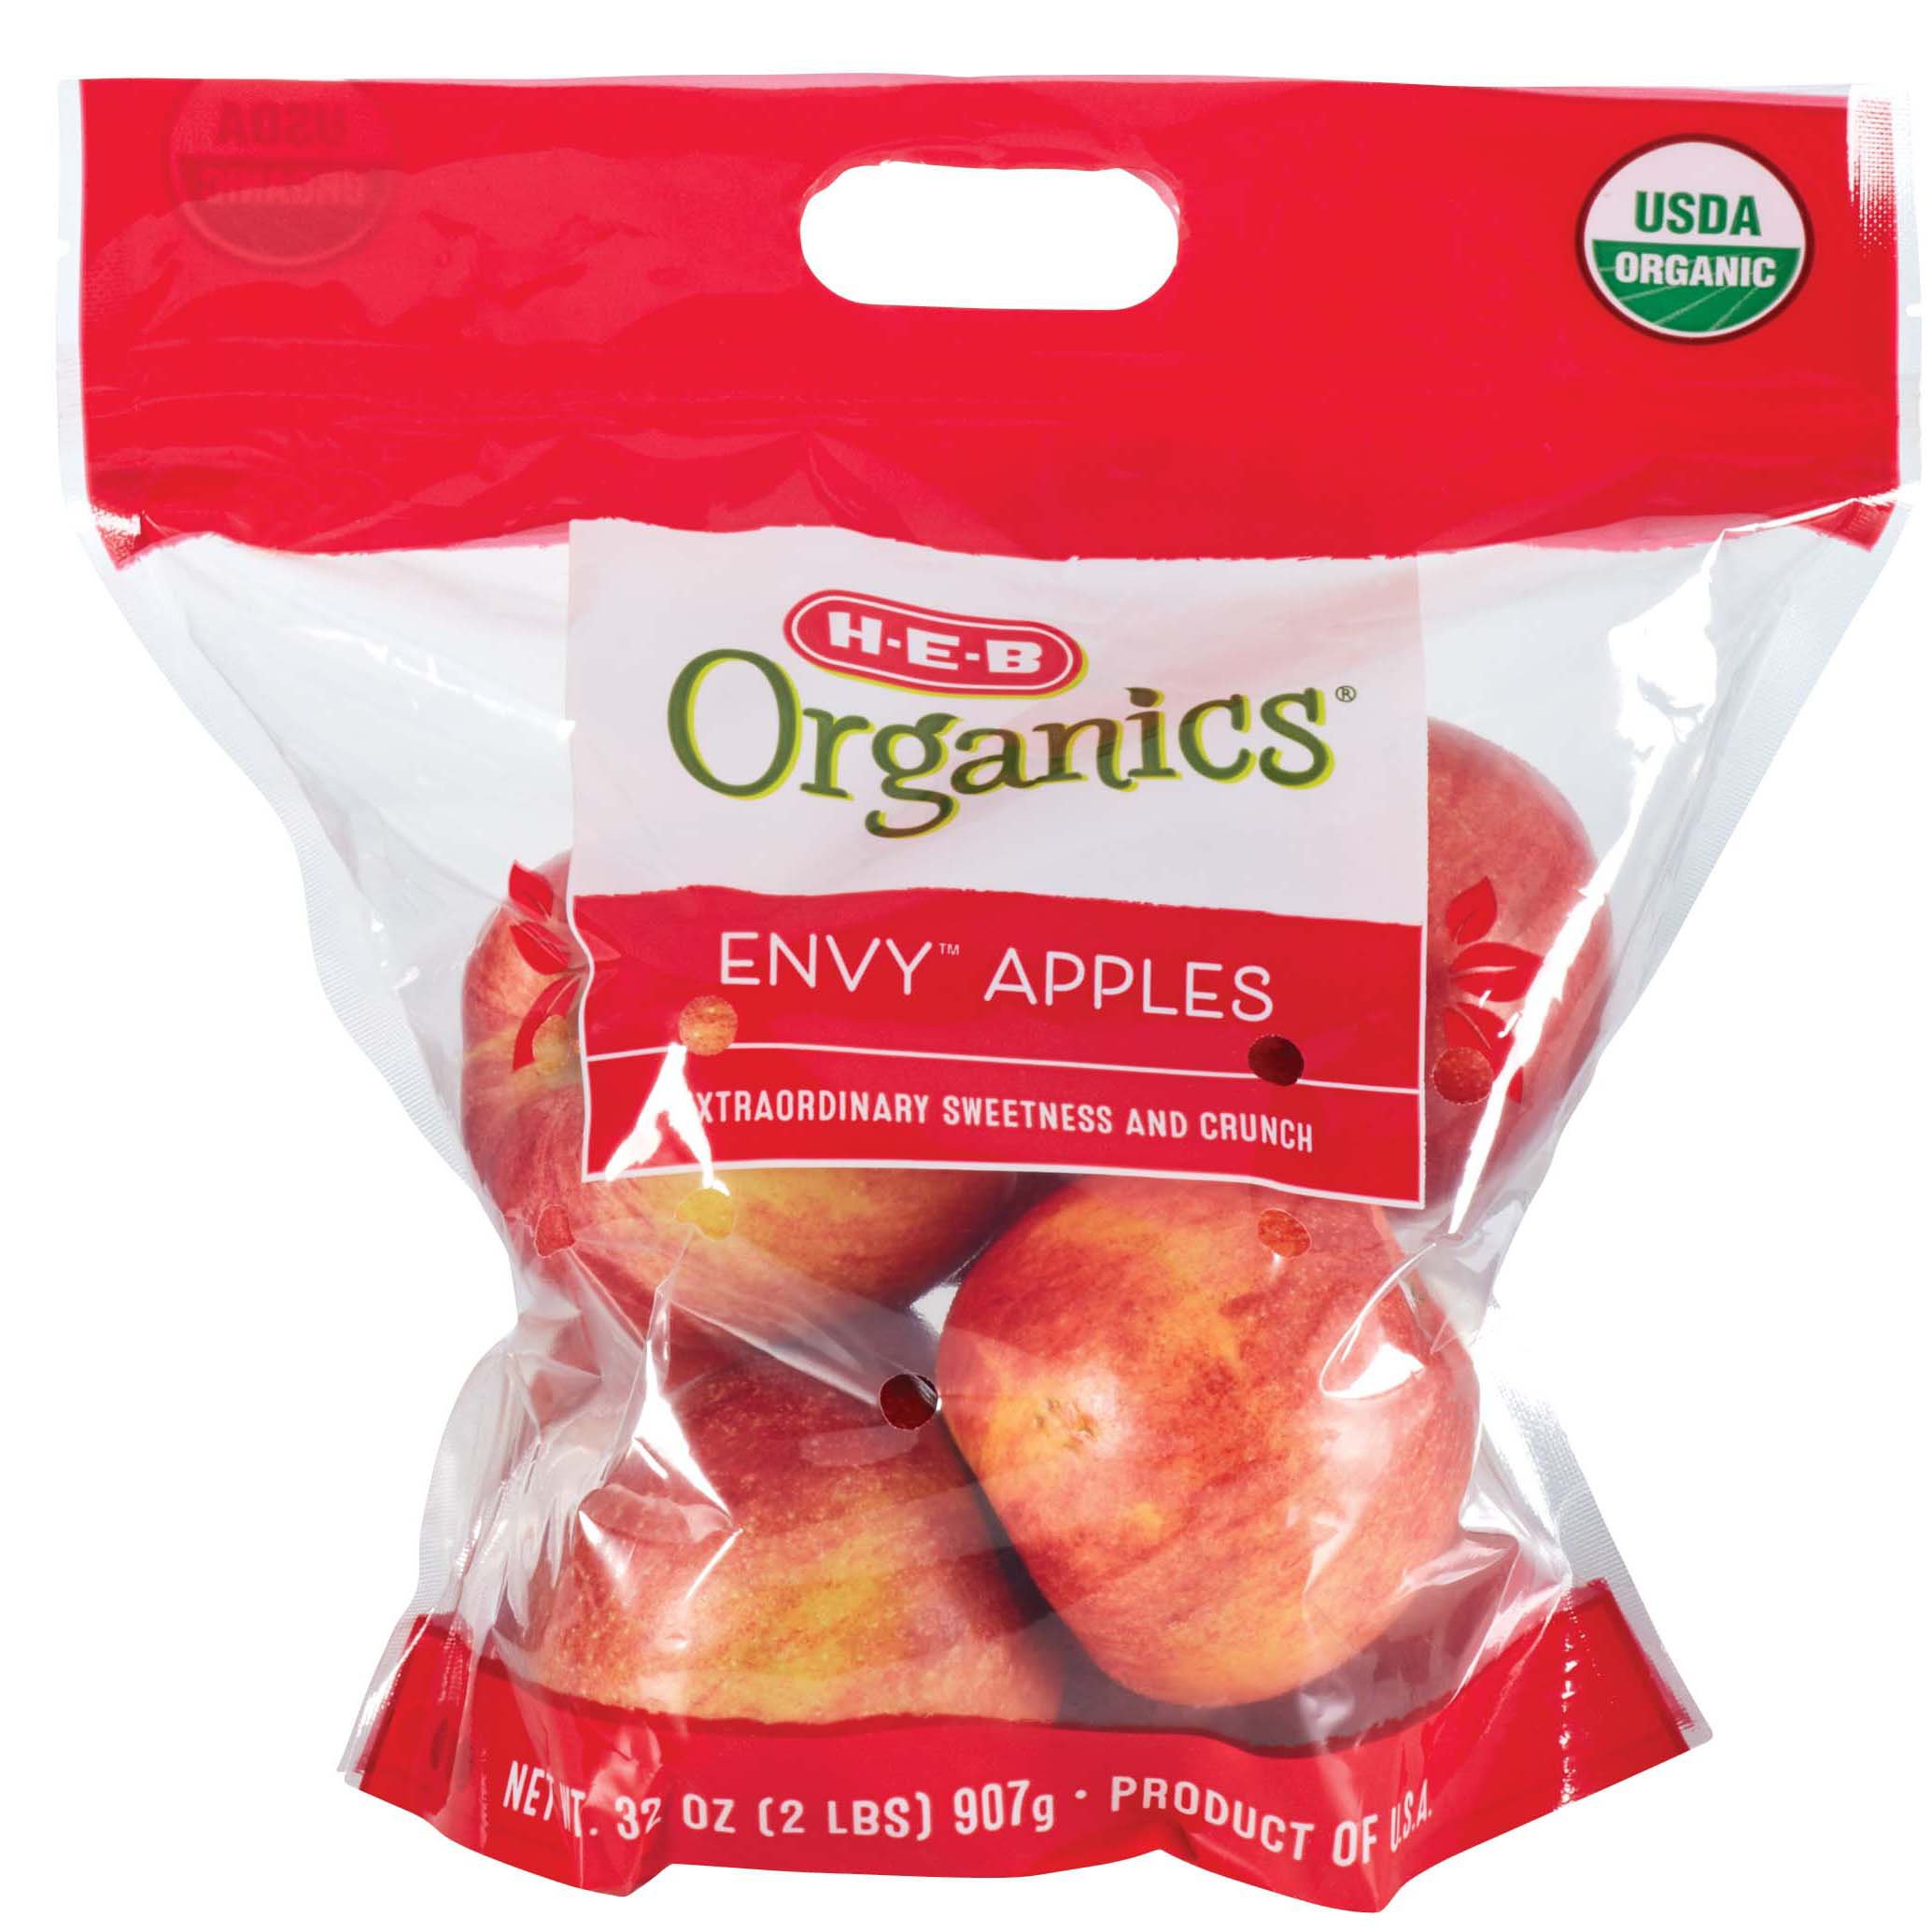 Fresh Organic Honeycrisp Apples - Shop Apples at H-E-B